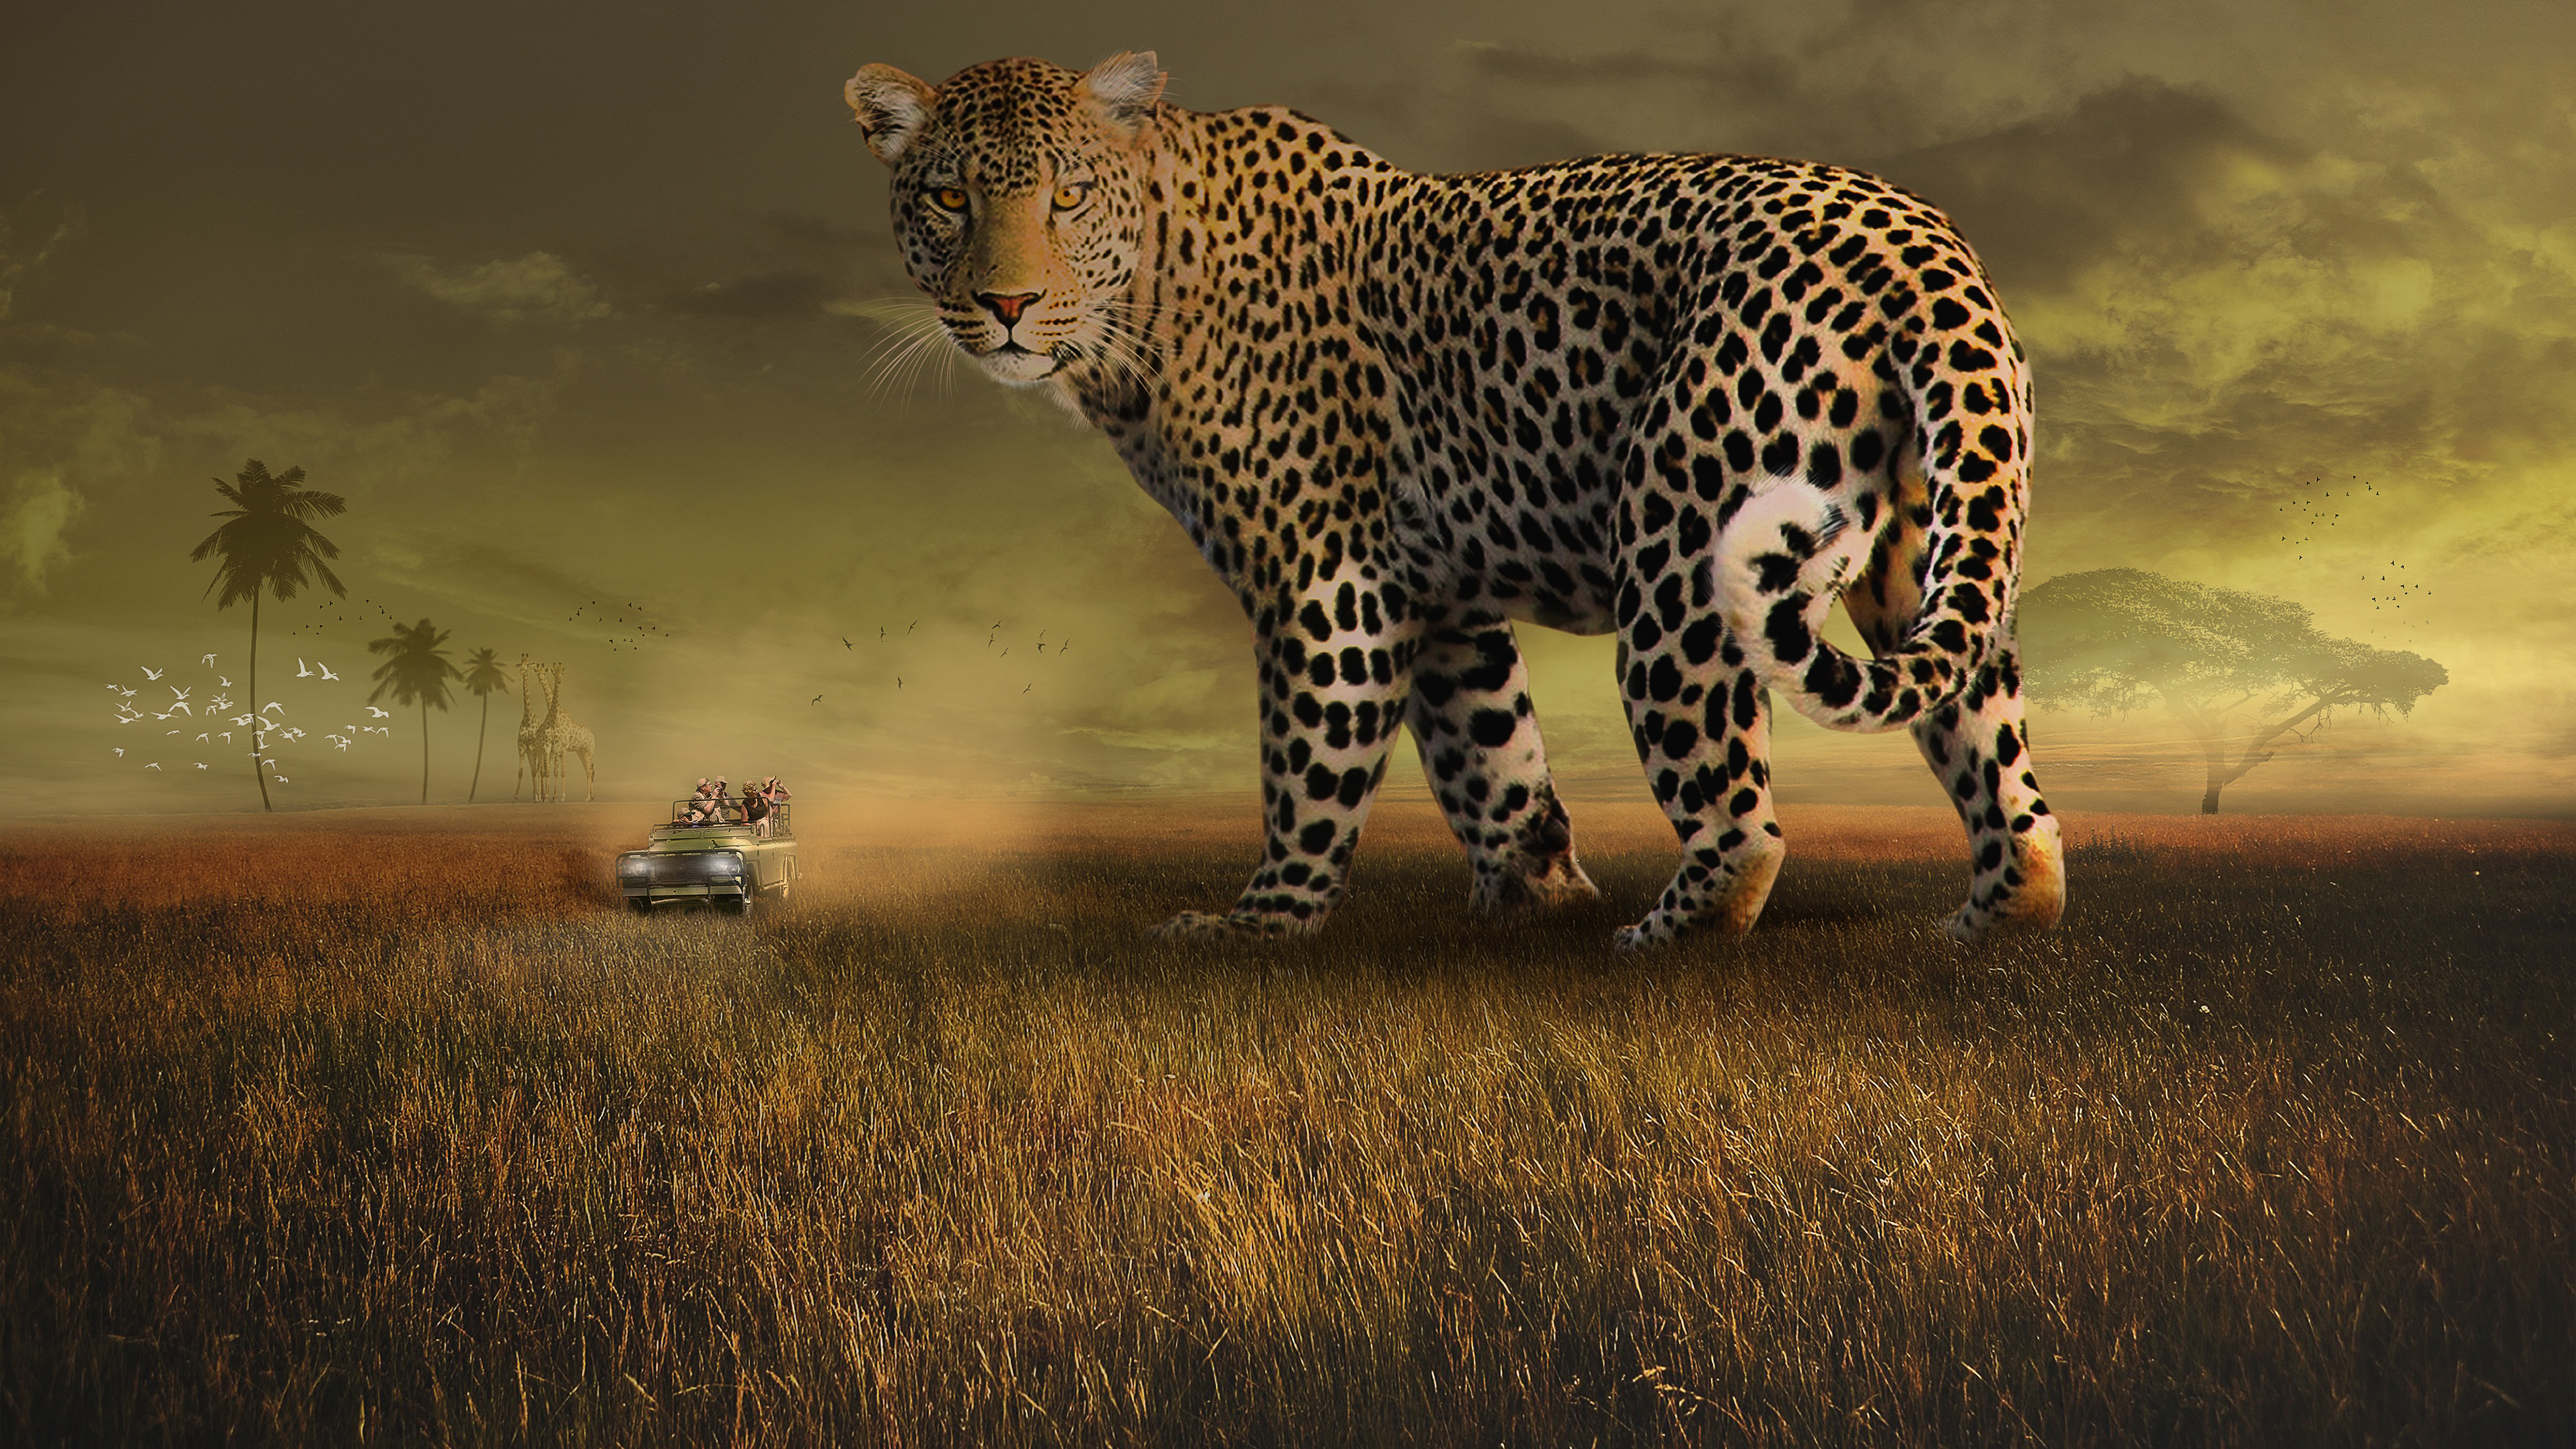 Leopard Safari 4k - Landscape Animal Wallpaper 4k - 4444x2500 Wallpaper -  